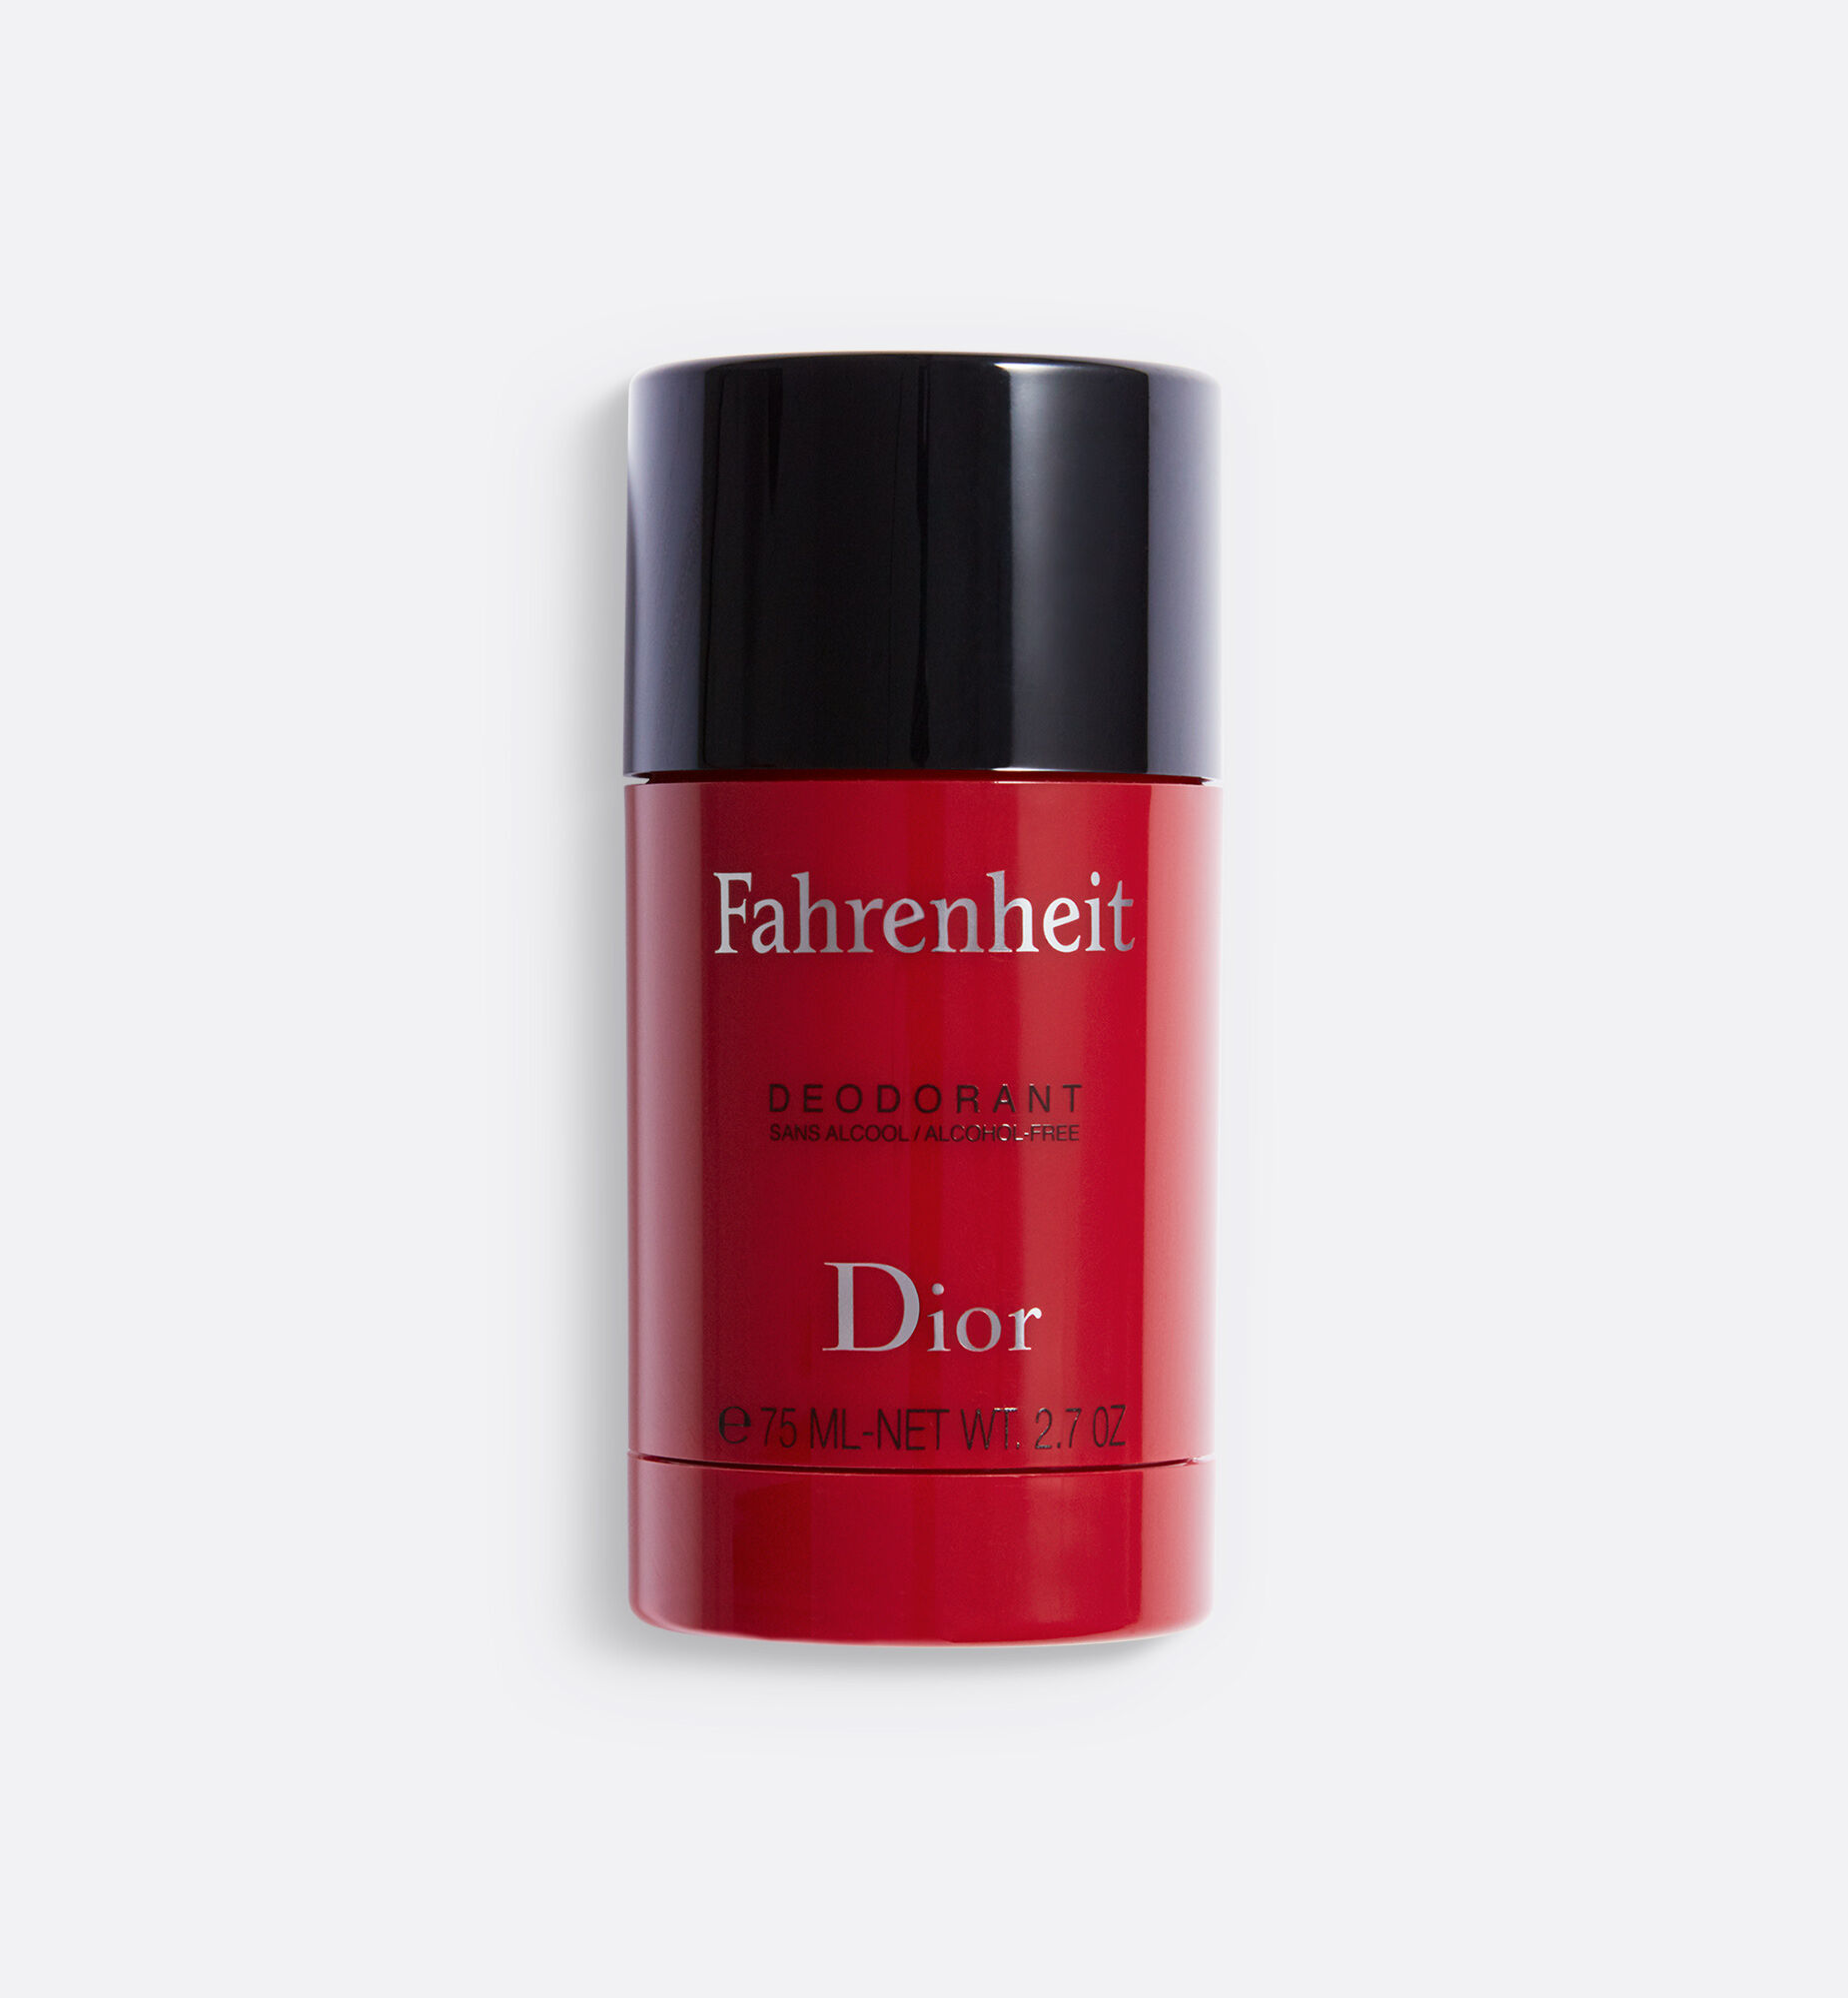 Christian Dior Fahrenheit Cologne For Men 75ml  Eau de Cologne price in  UAE  Amazon UAE  kanbkam